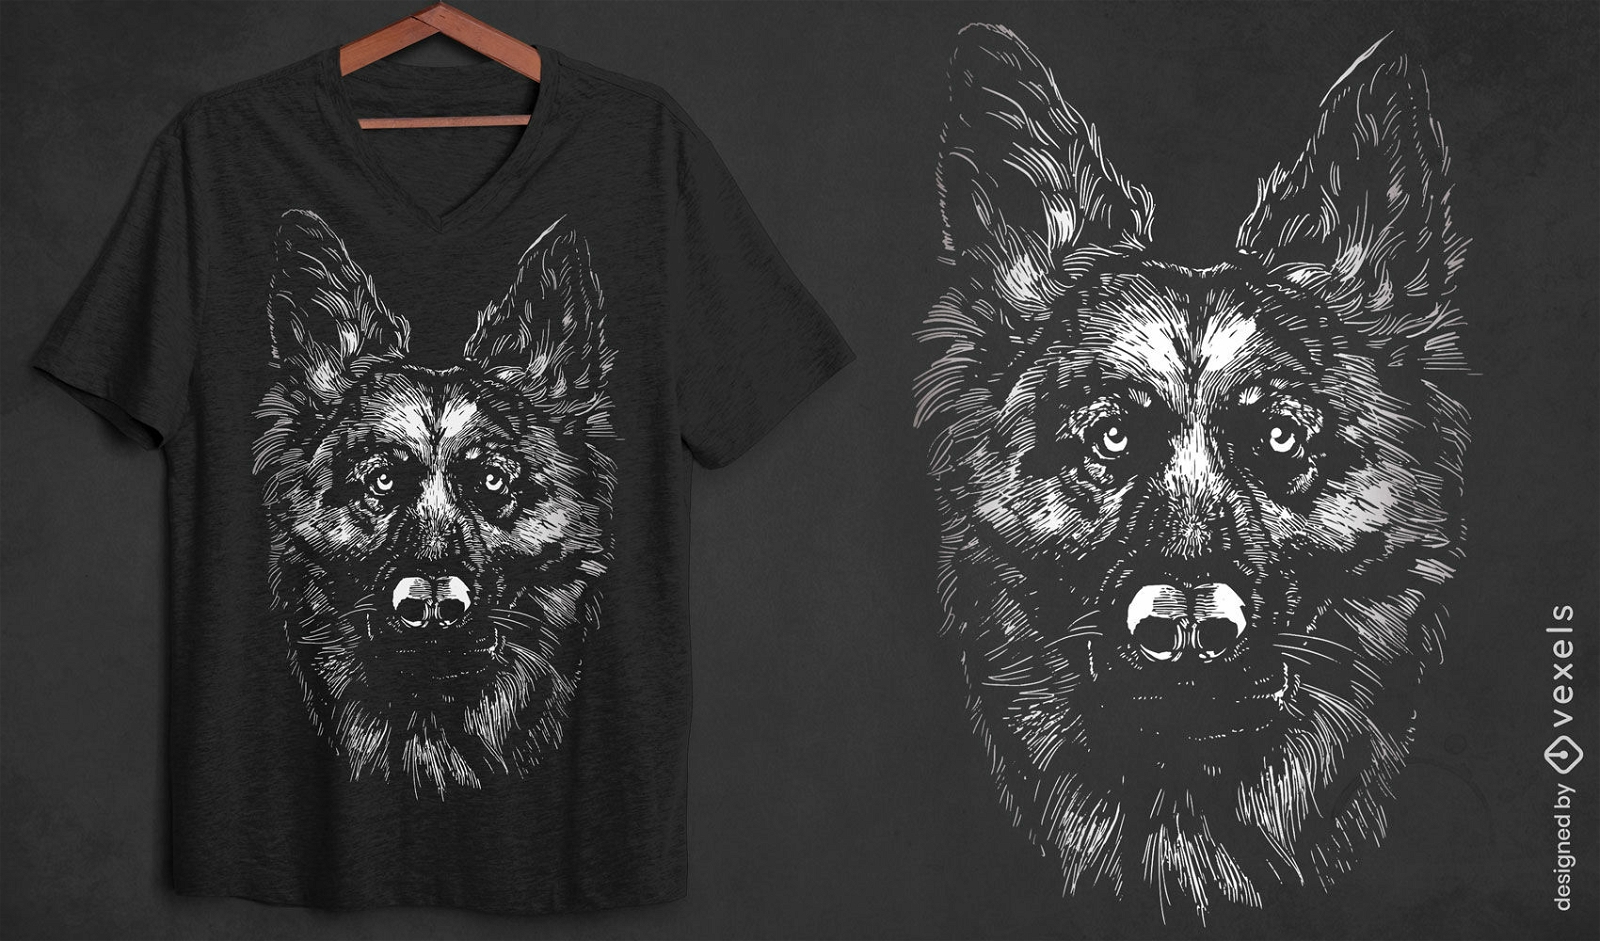 German shepherd dog animal t-shirt design